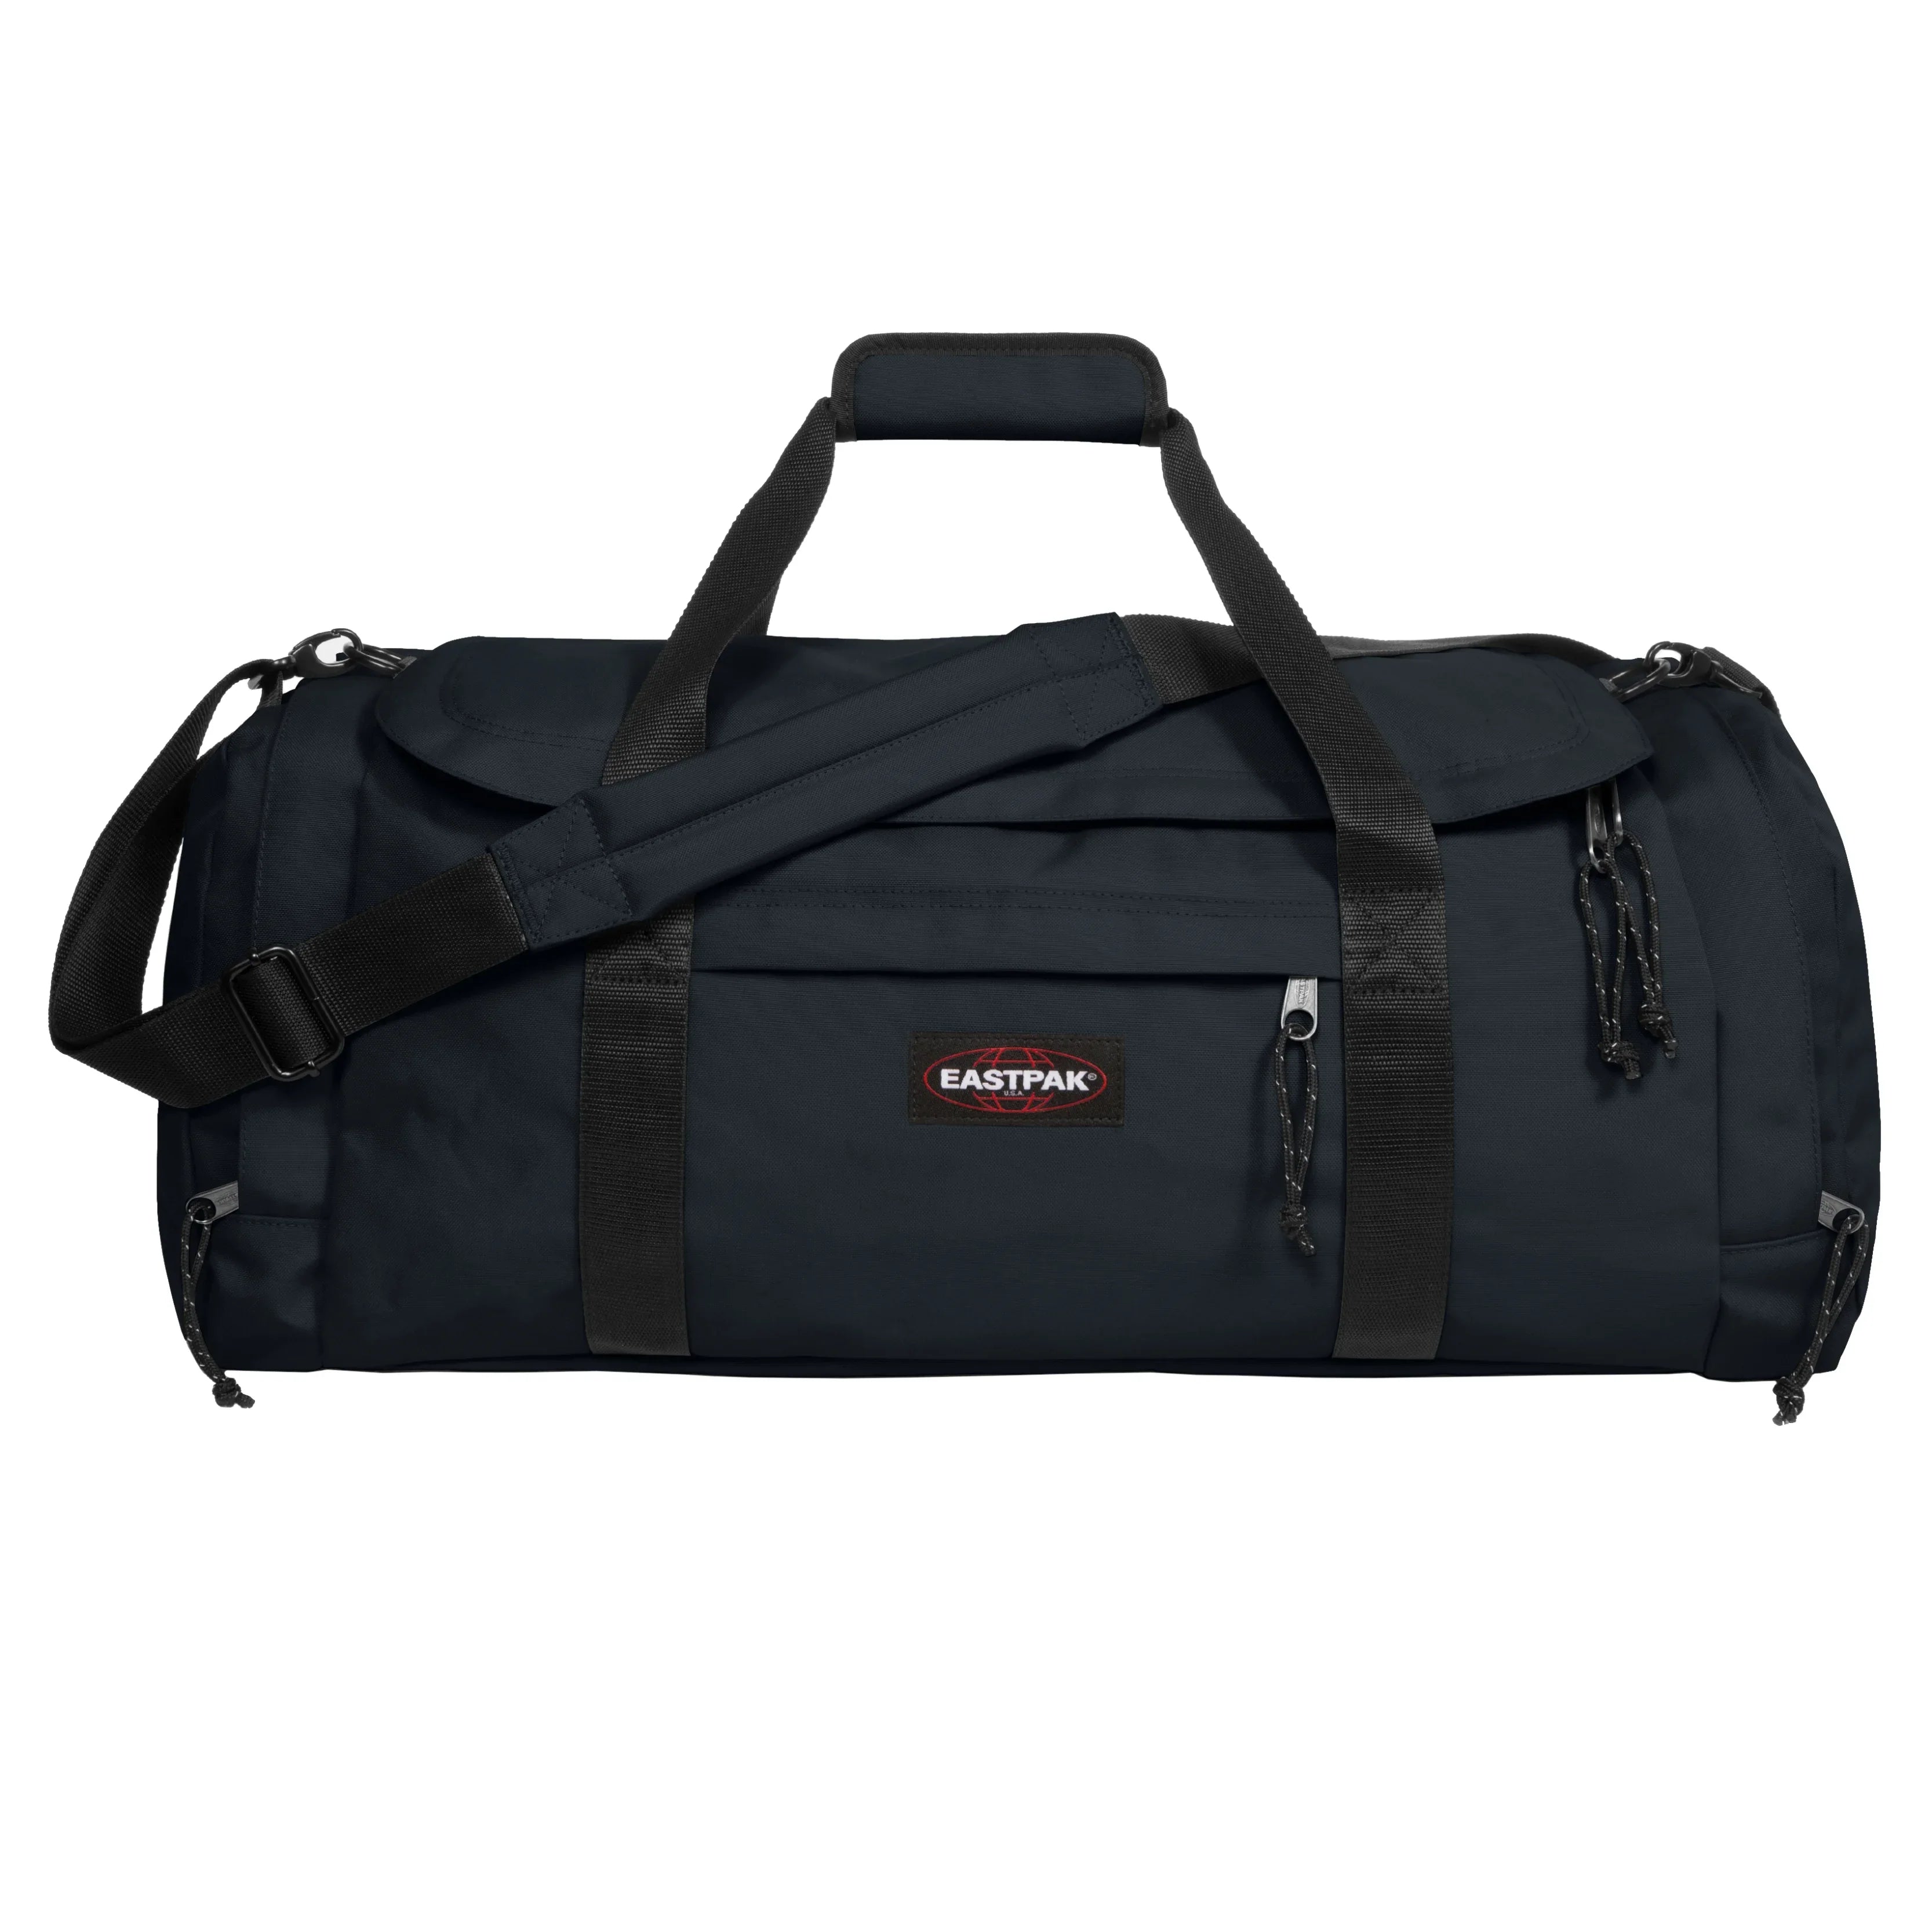 Eastpak Authentic Travel Reader M Plus travel bag 63 cm - black